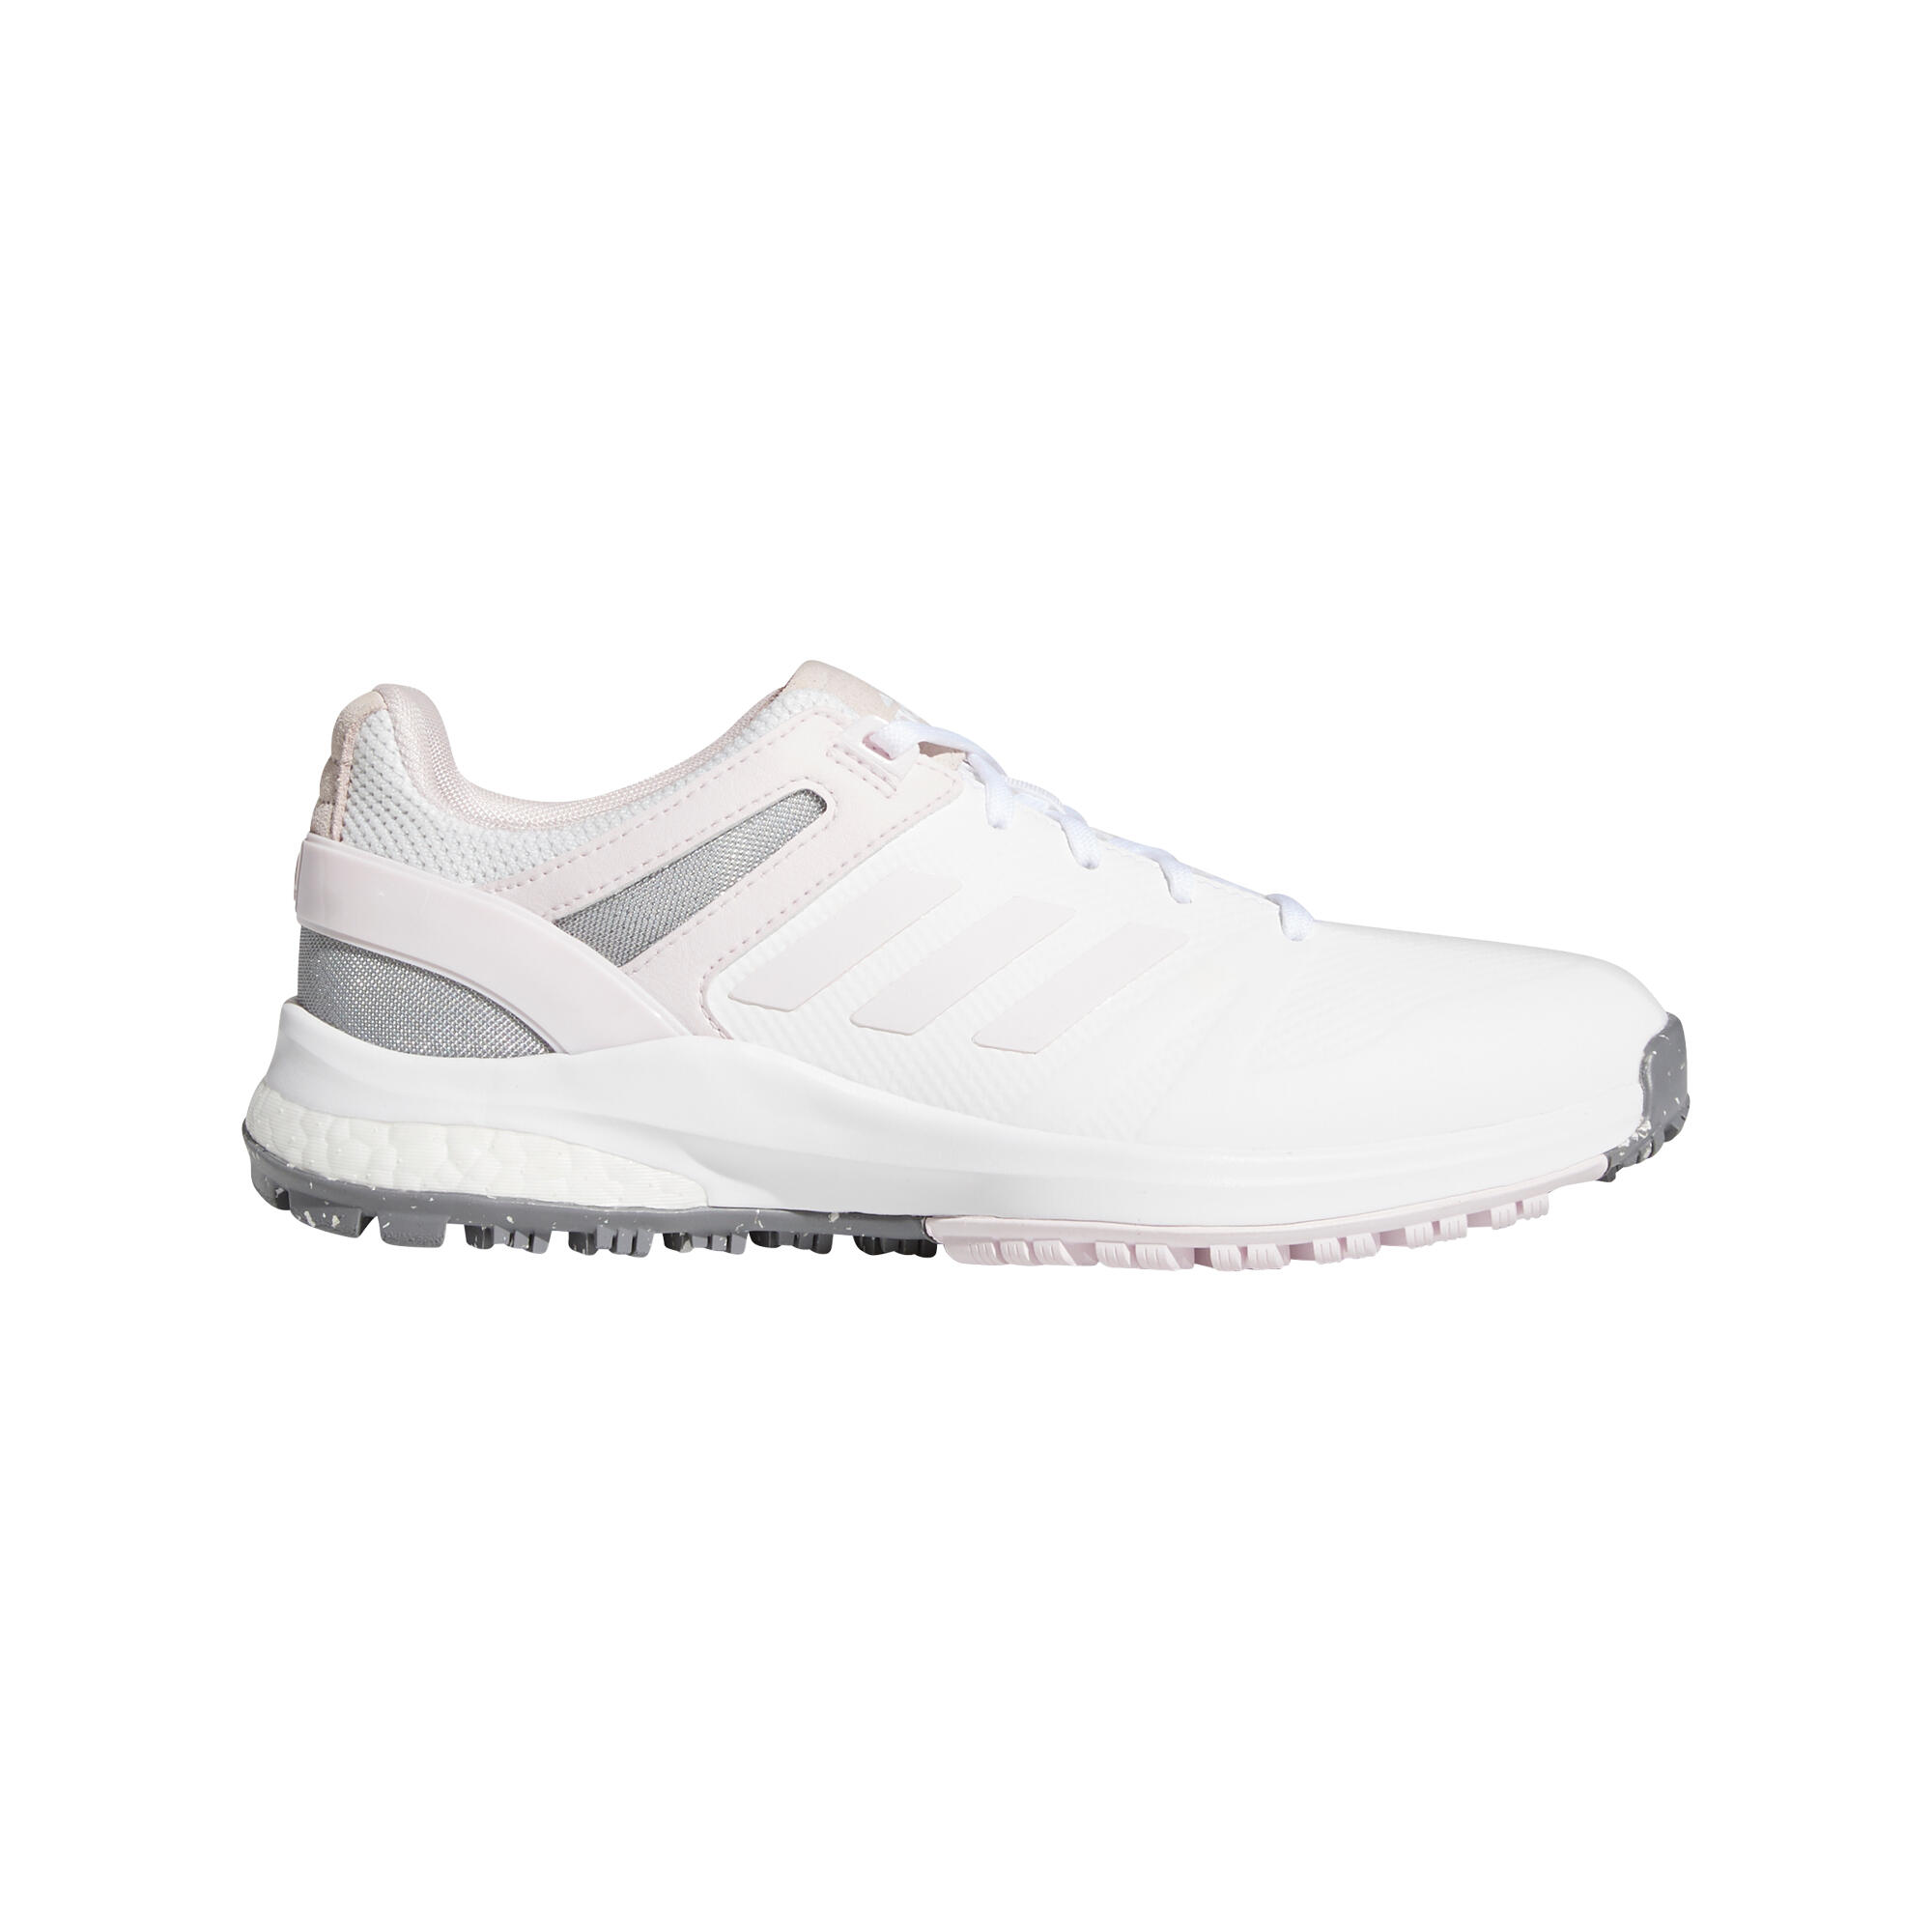 ADIDAS adidas 2022 EQT Spikeless Golf Shoes - ftwr white